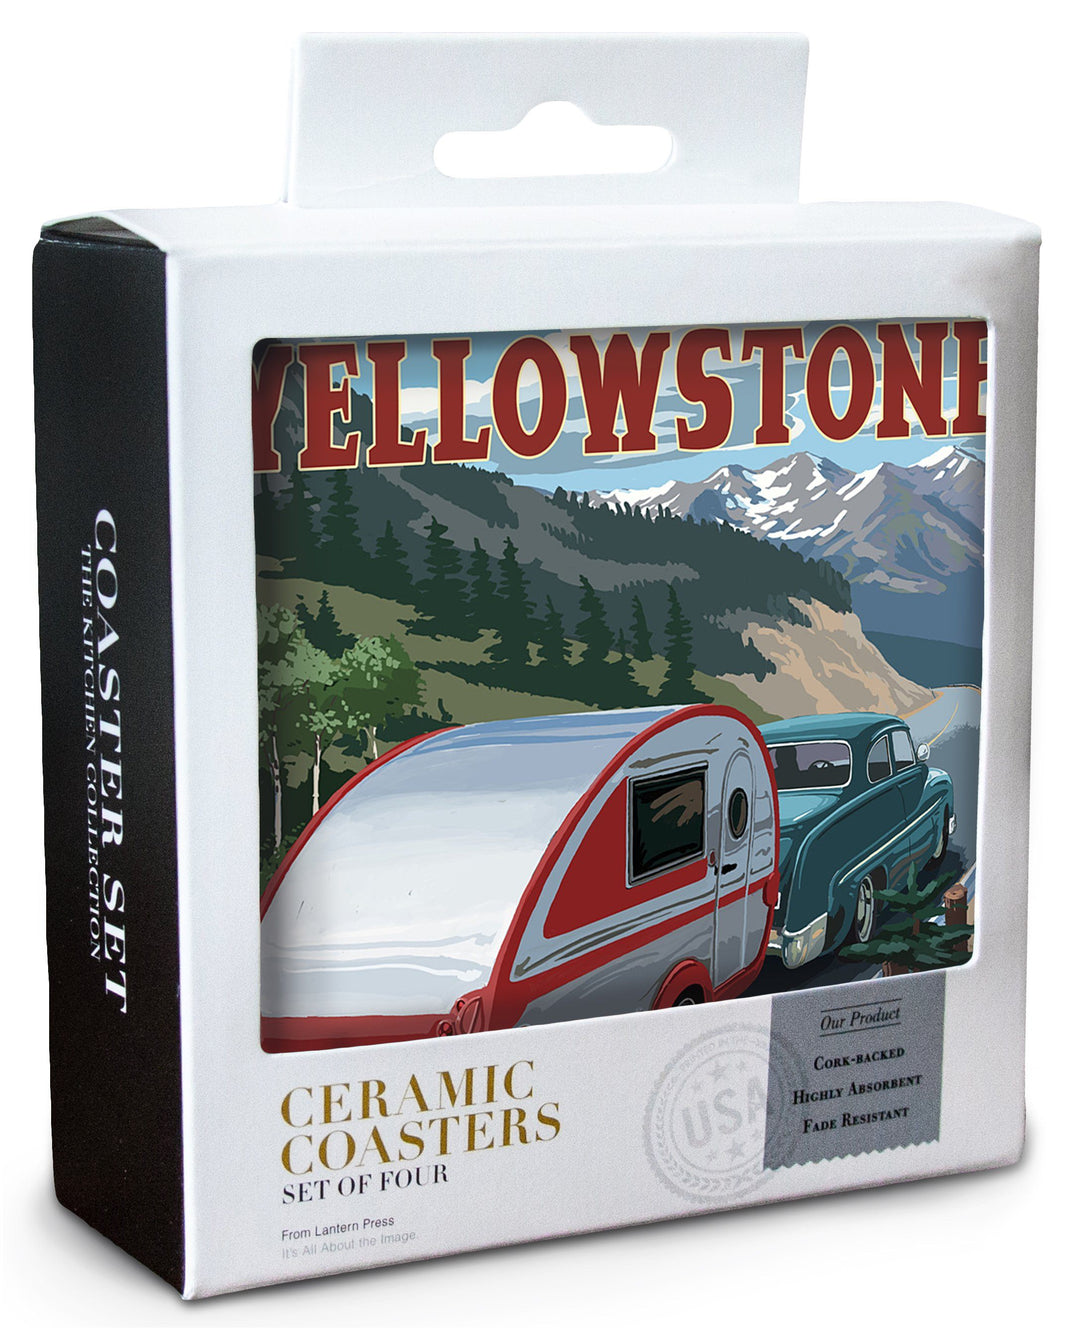 Yellowstone, Montana, Retro Camper, Lantern Press Artwork, Coaster Set Coasters Lantern Press 